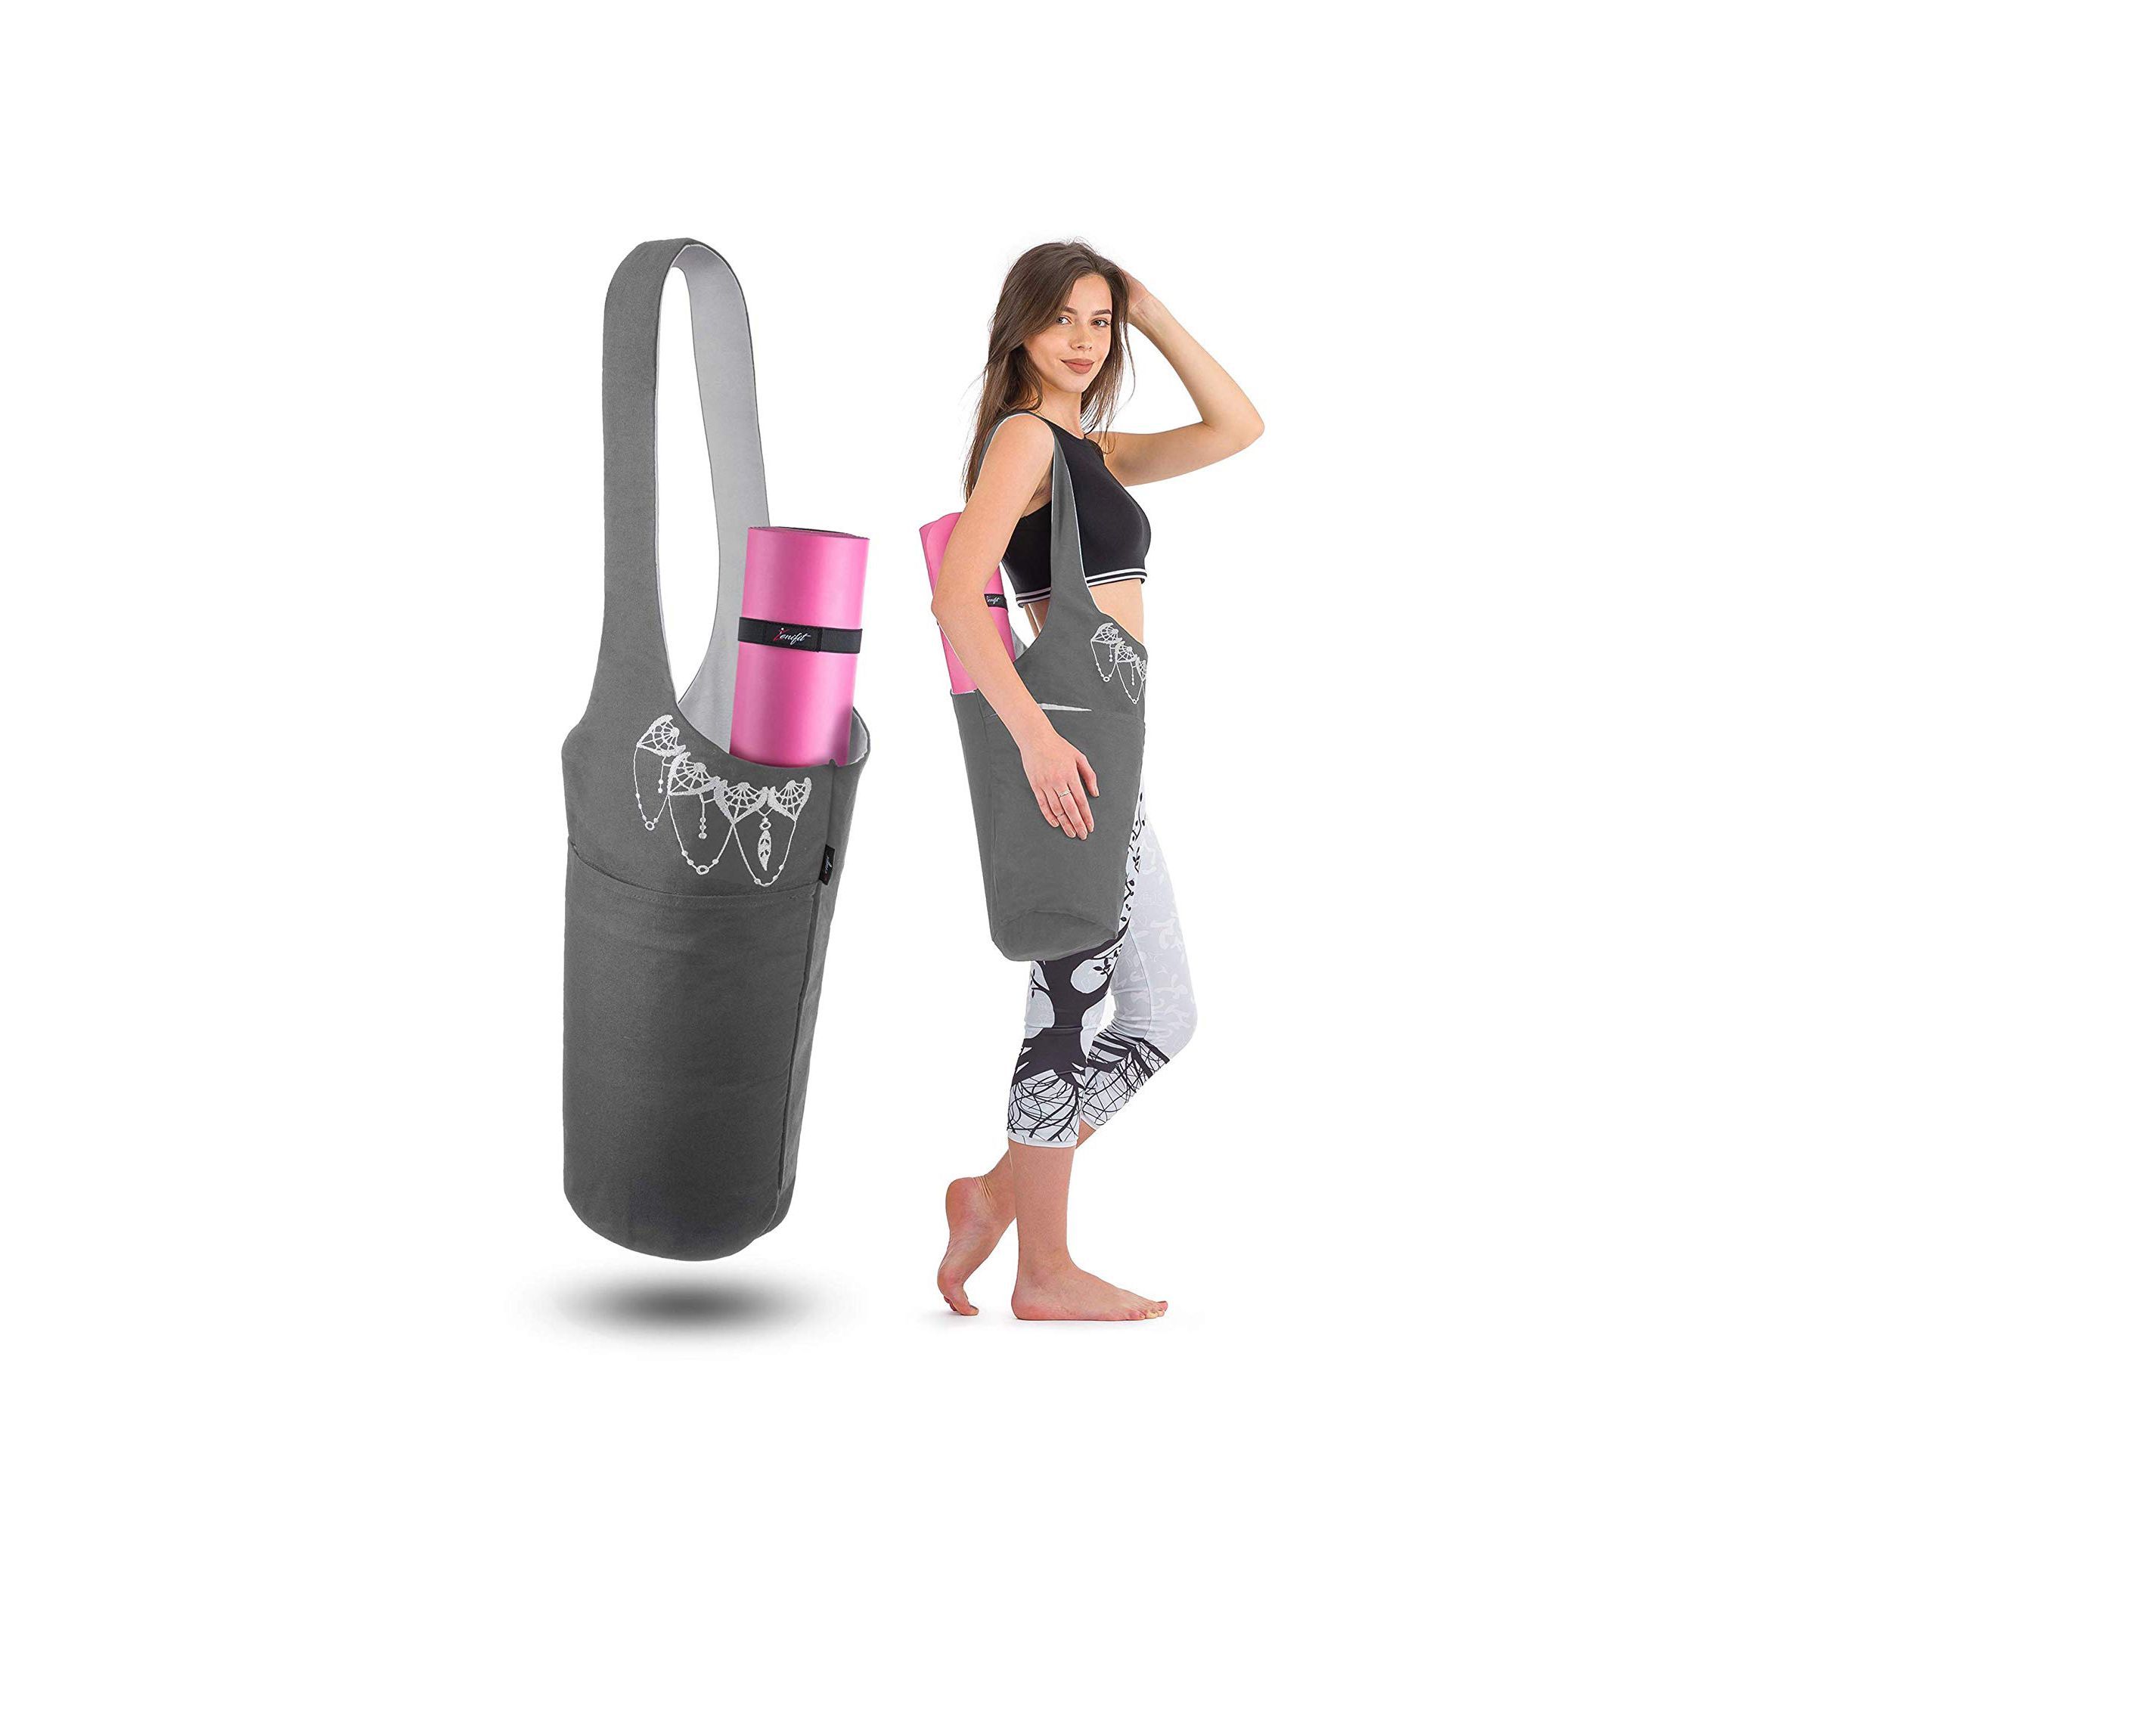 Firiseroh I Love Ballet Yoga Mat Bag for Women Carrier Large with Water Bottle Holder Pockets 